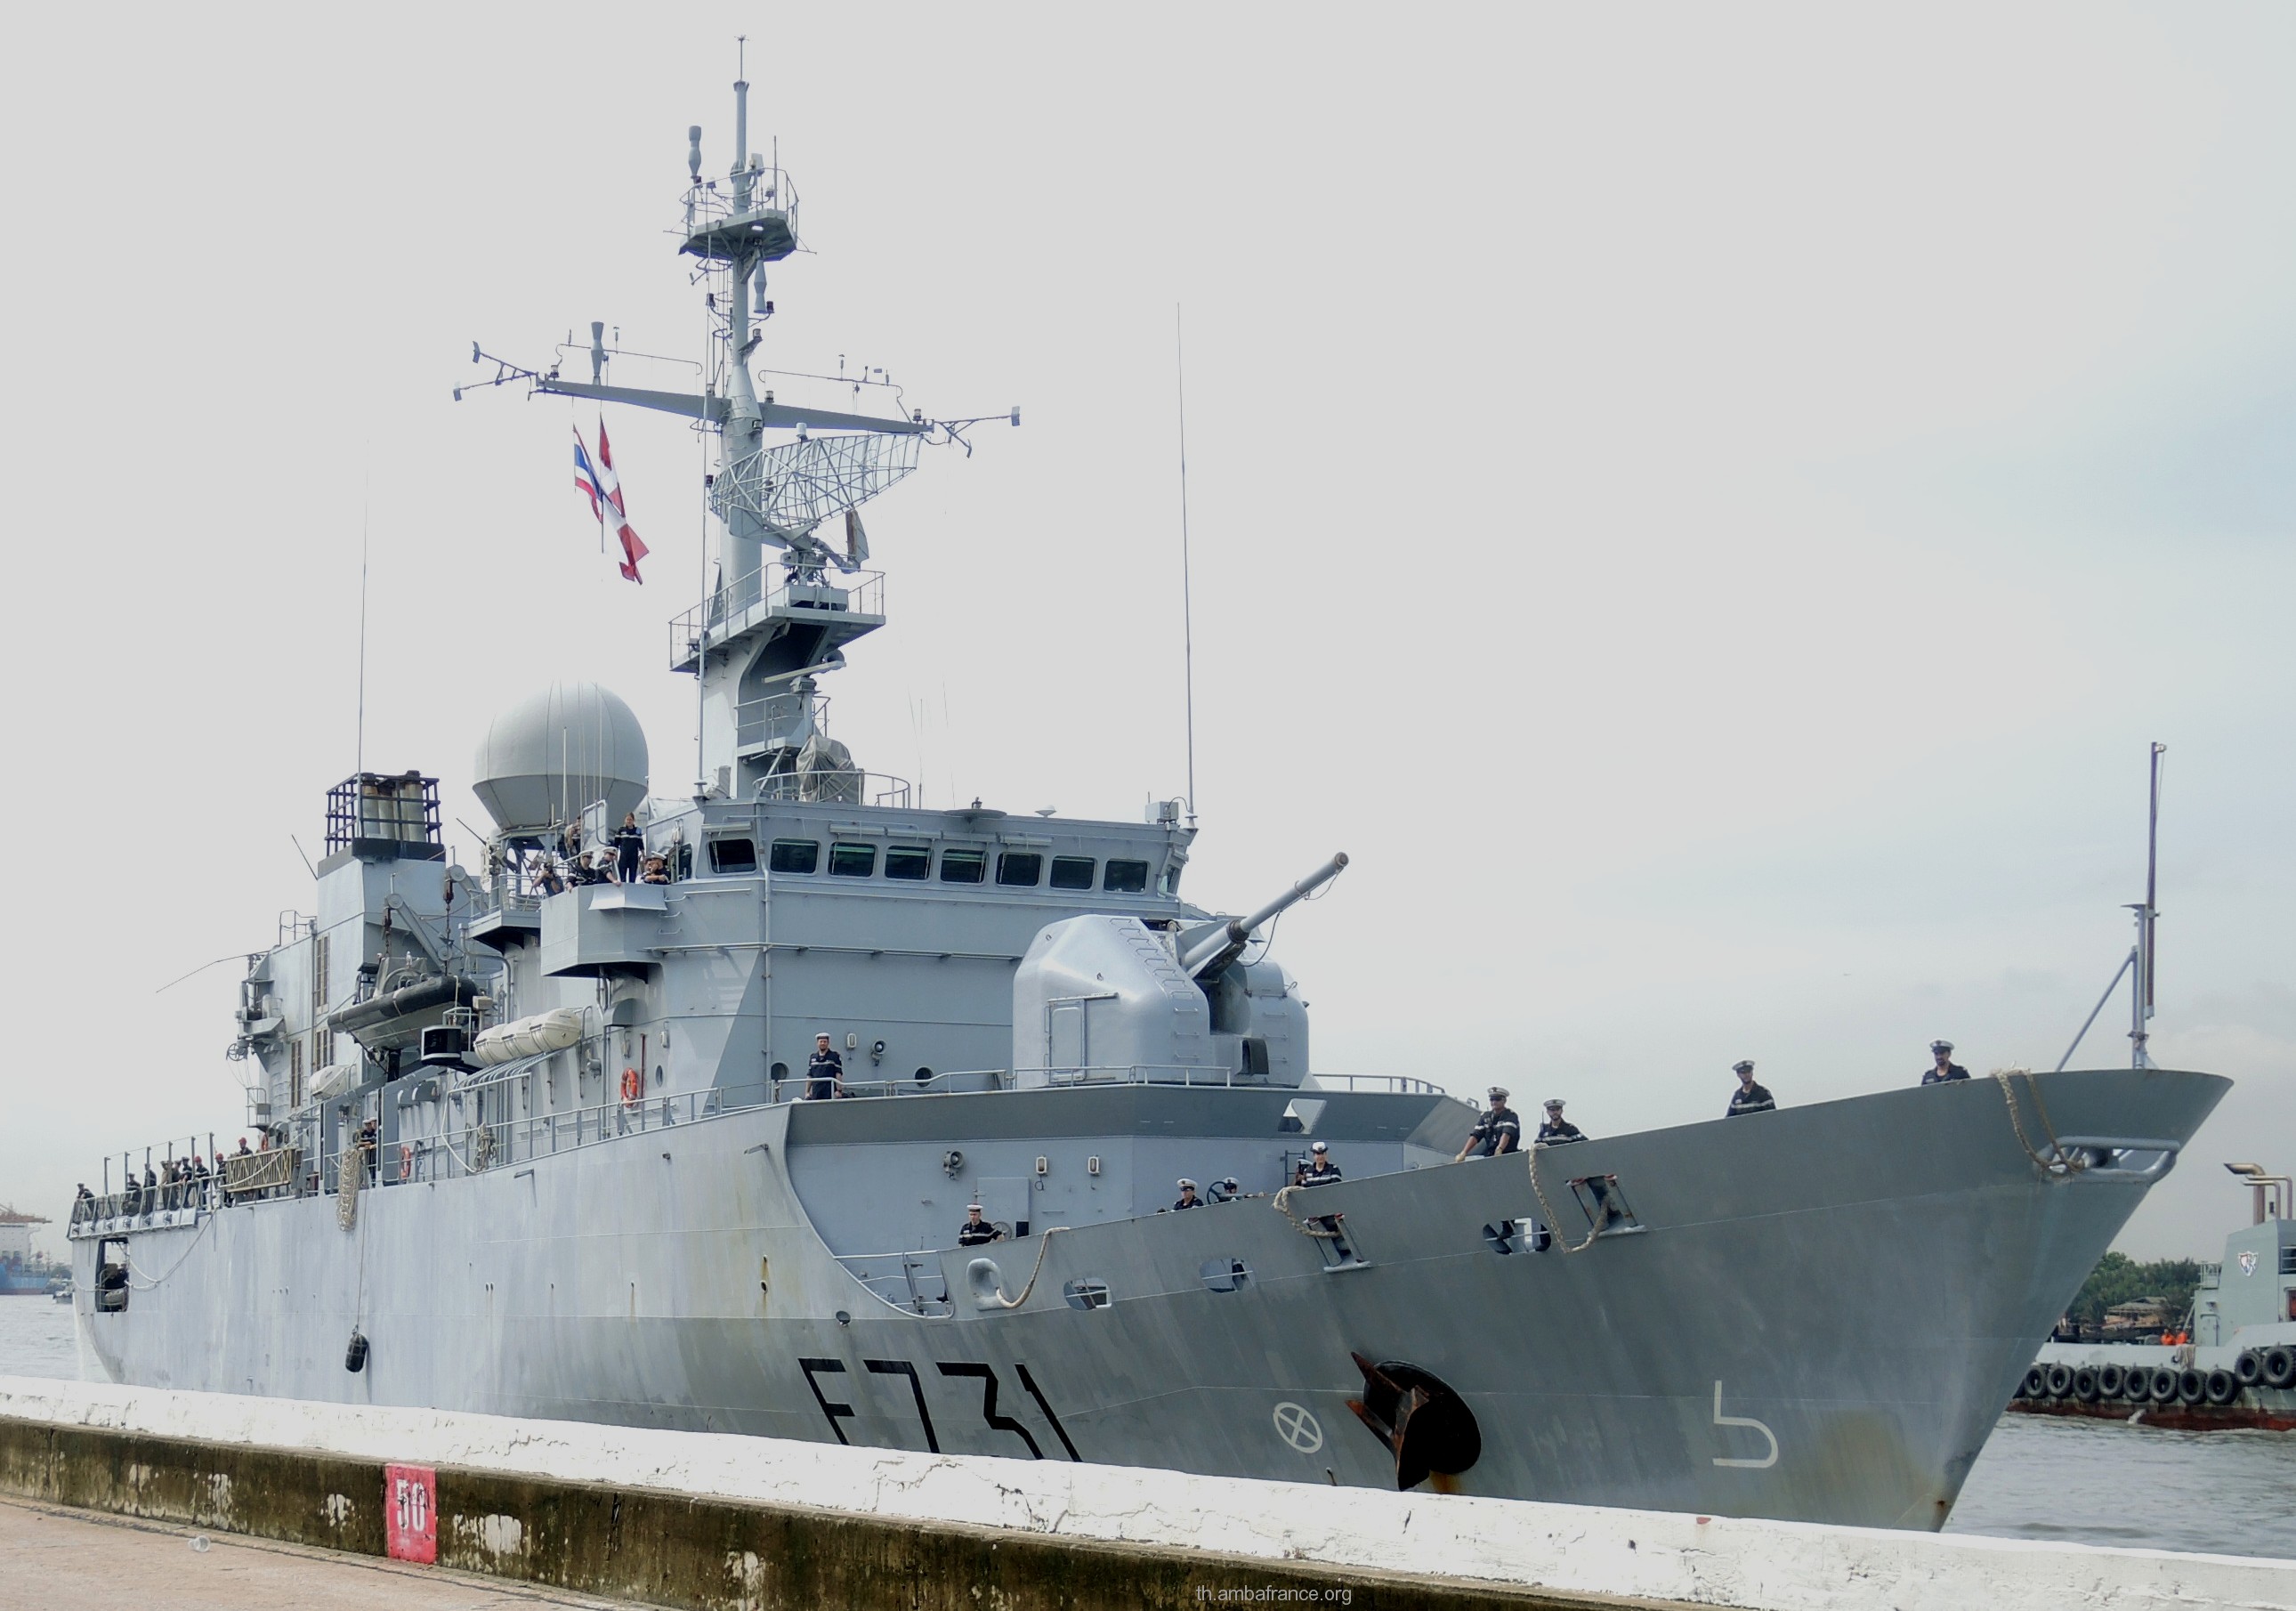 f-731 fs prairial floreal class frigate french navy marine nationale fregate surveillance 03